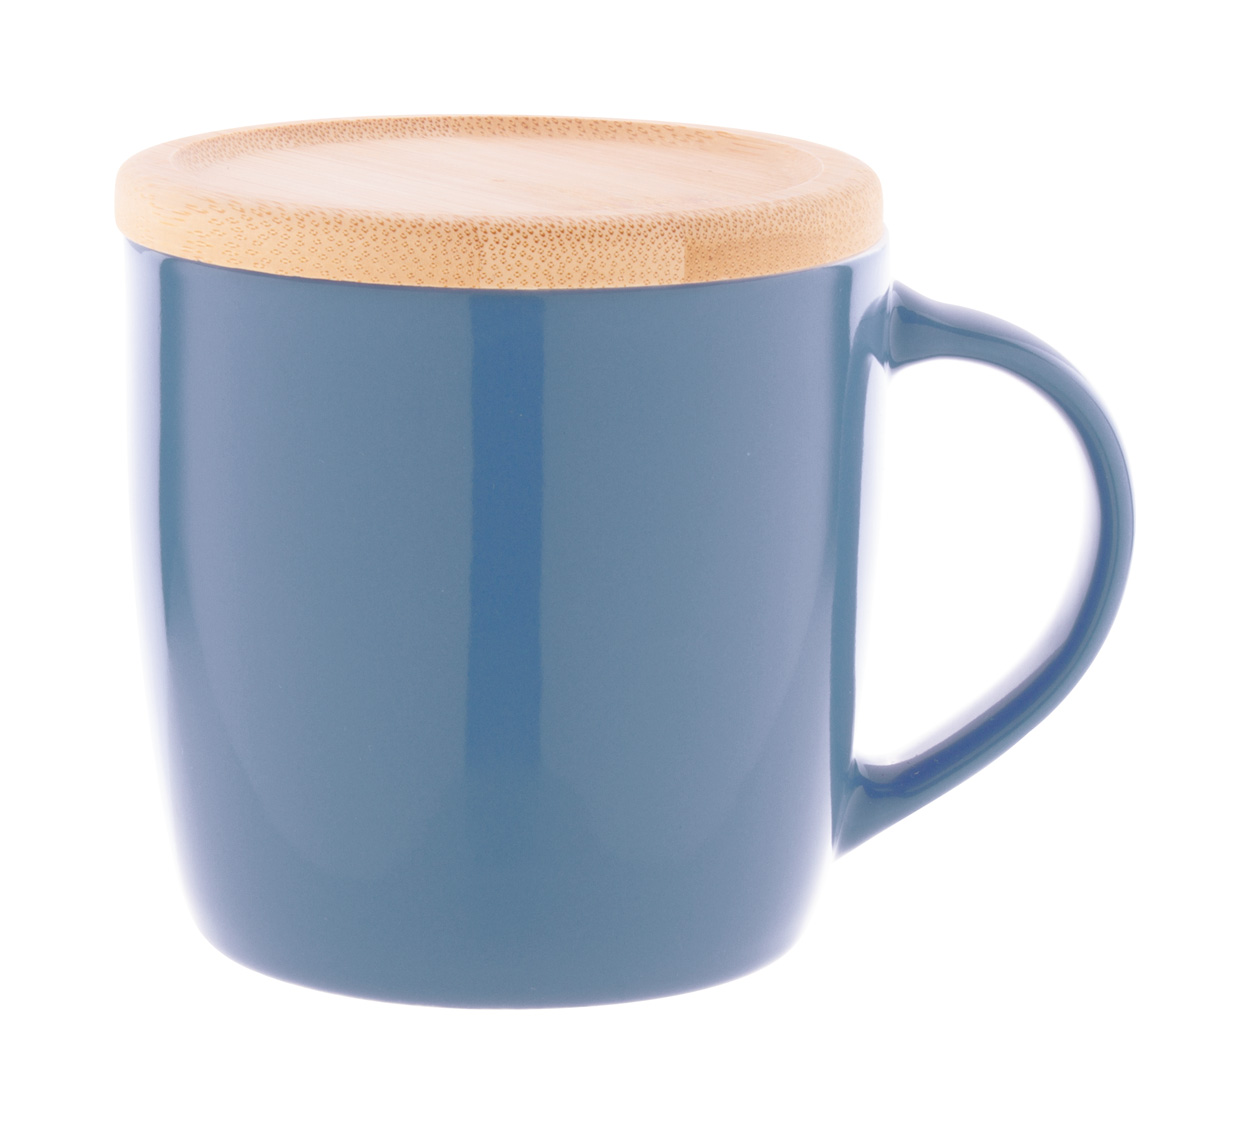 Hemera Plus mug - azurblau  